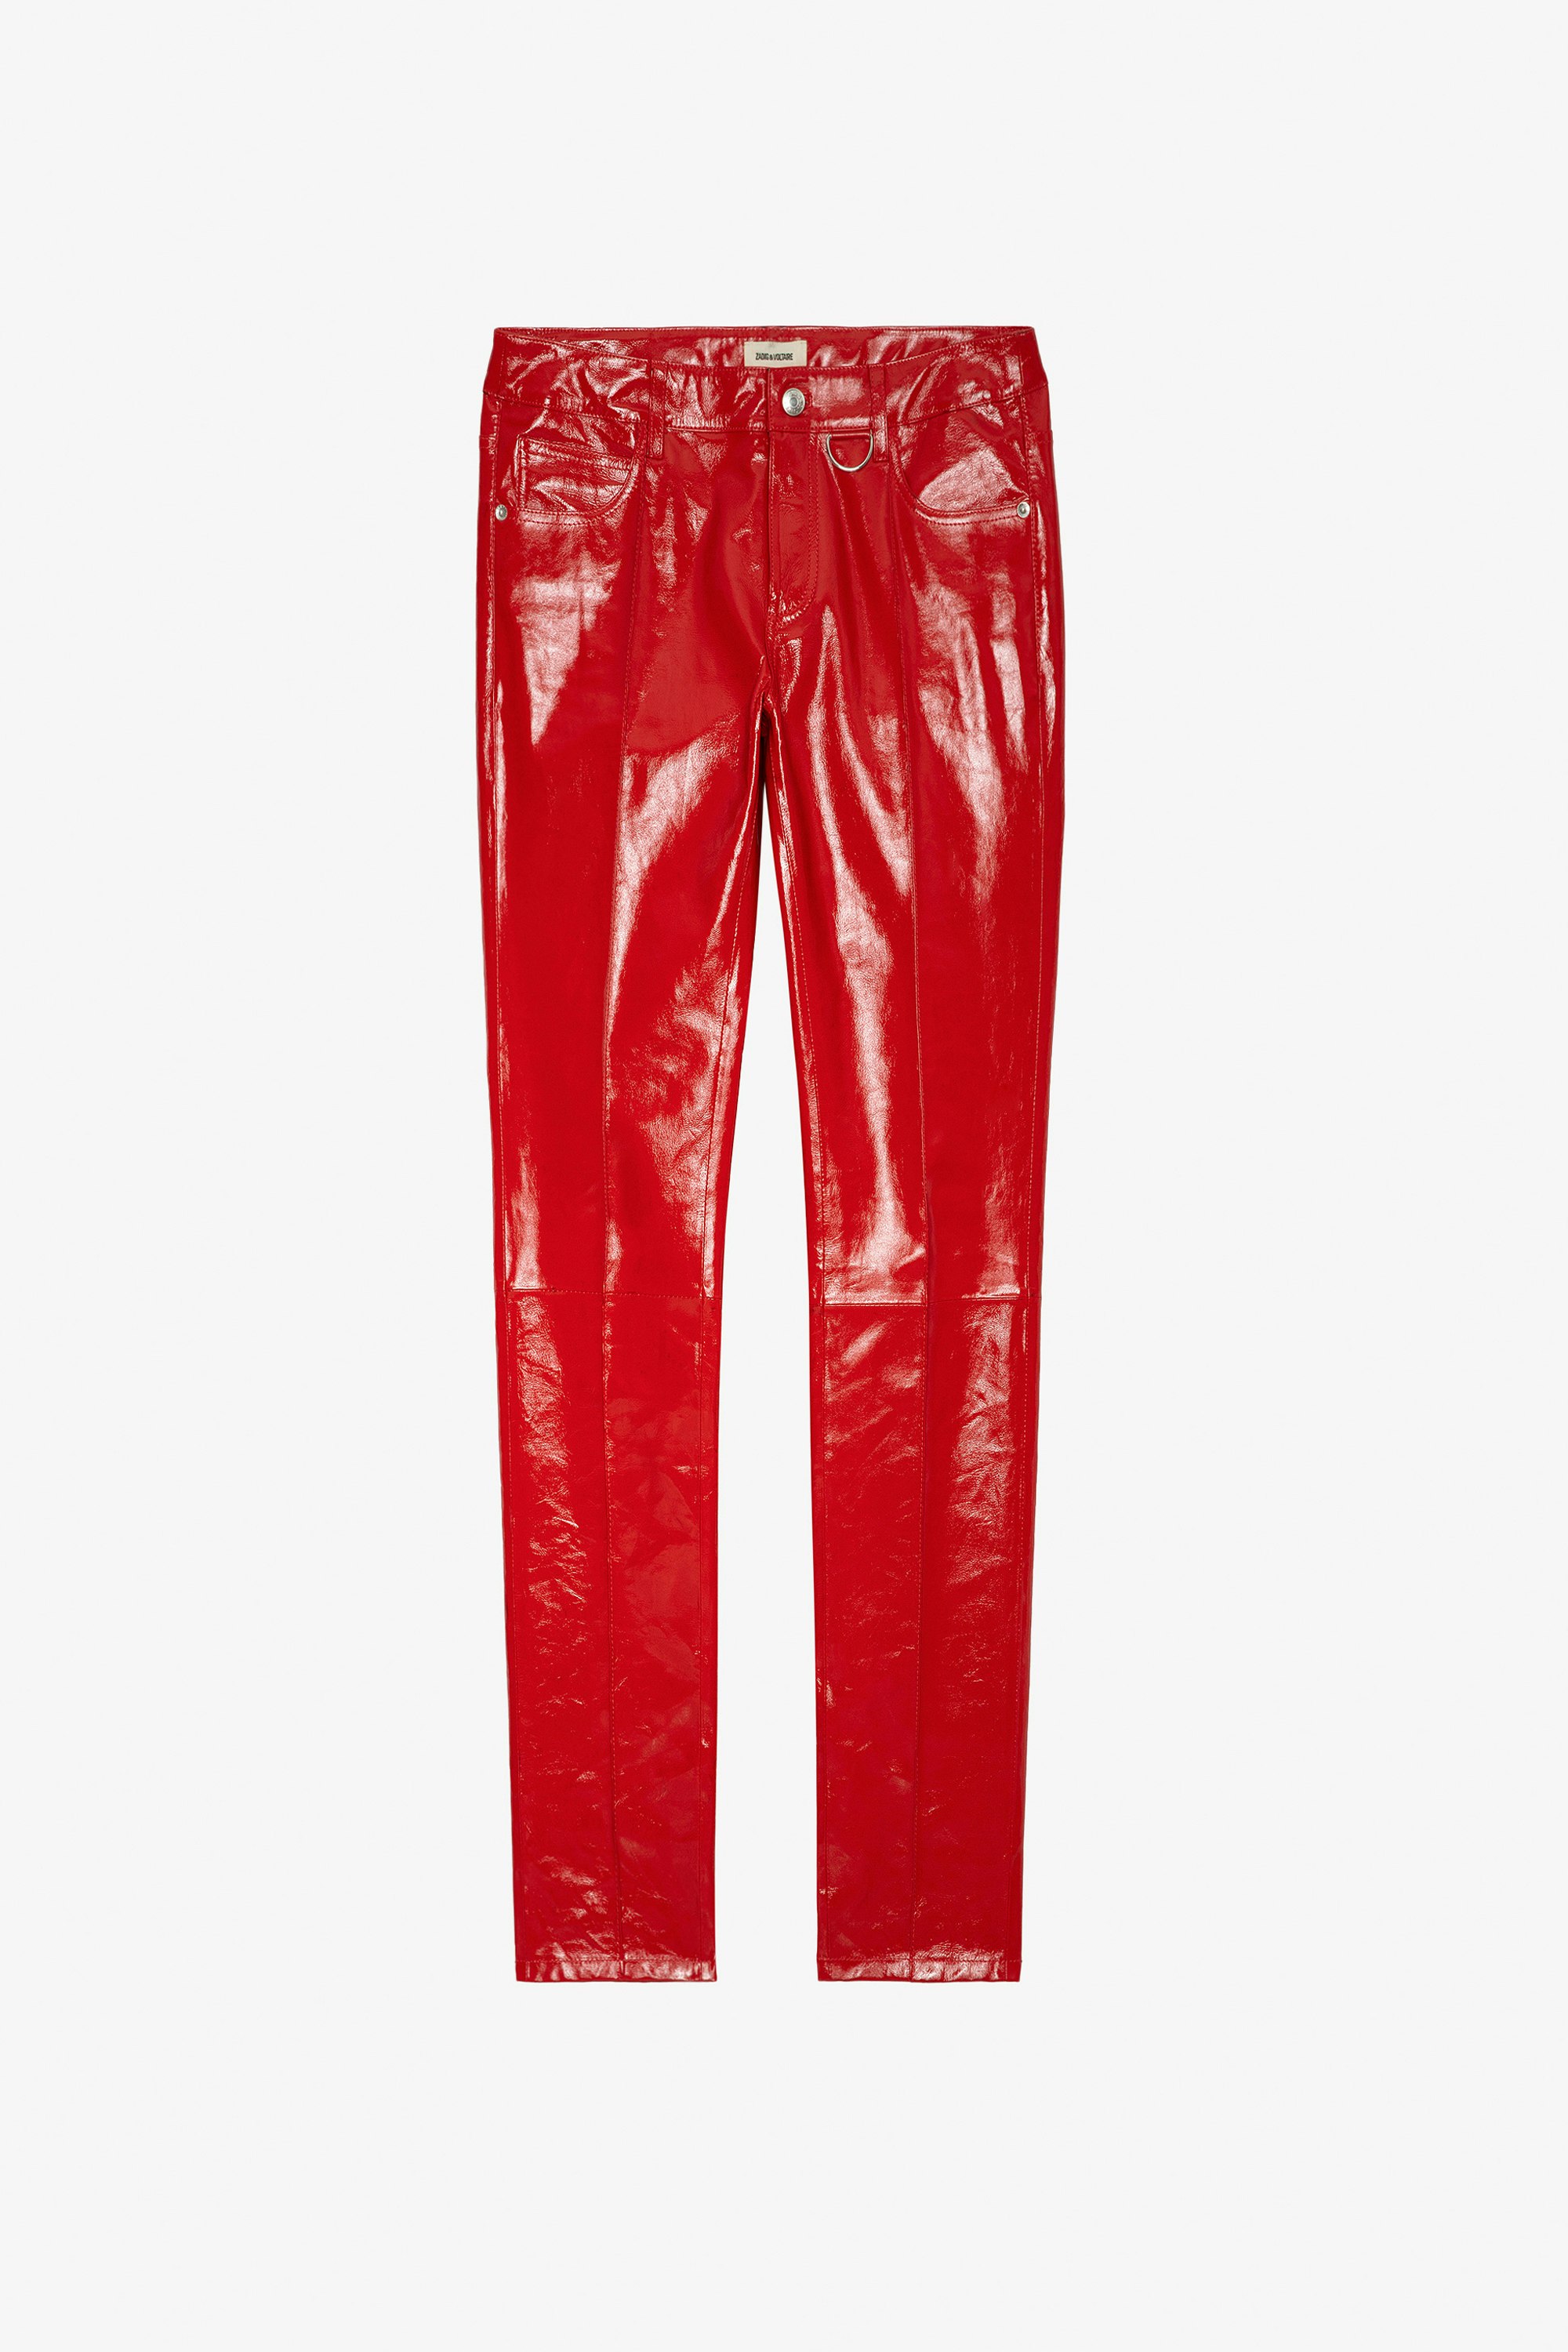 Peko Vinyl Trousers - Women’s red vinyl leather trousers.